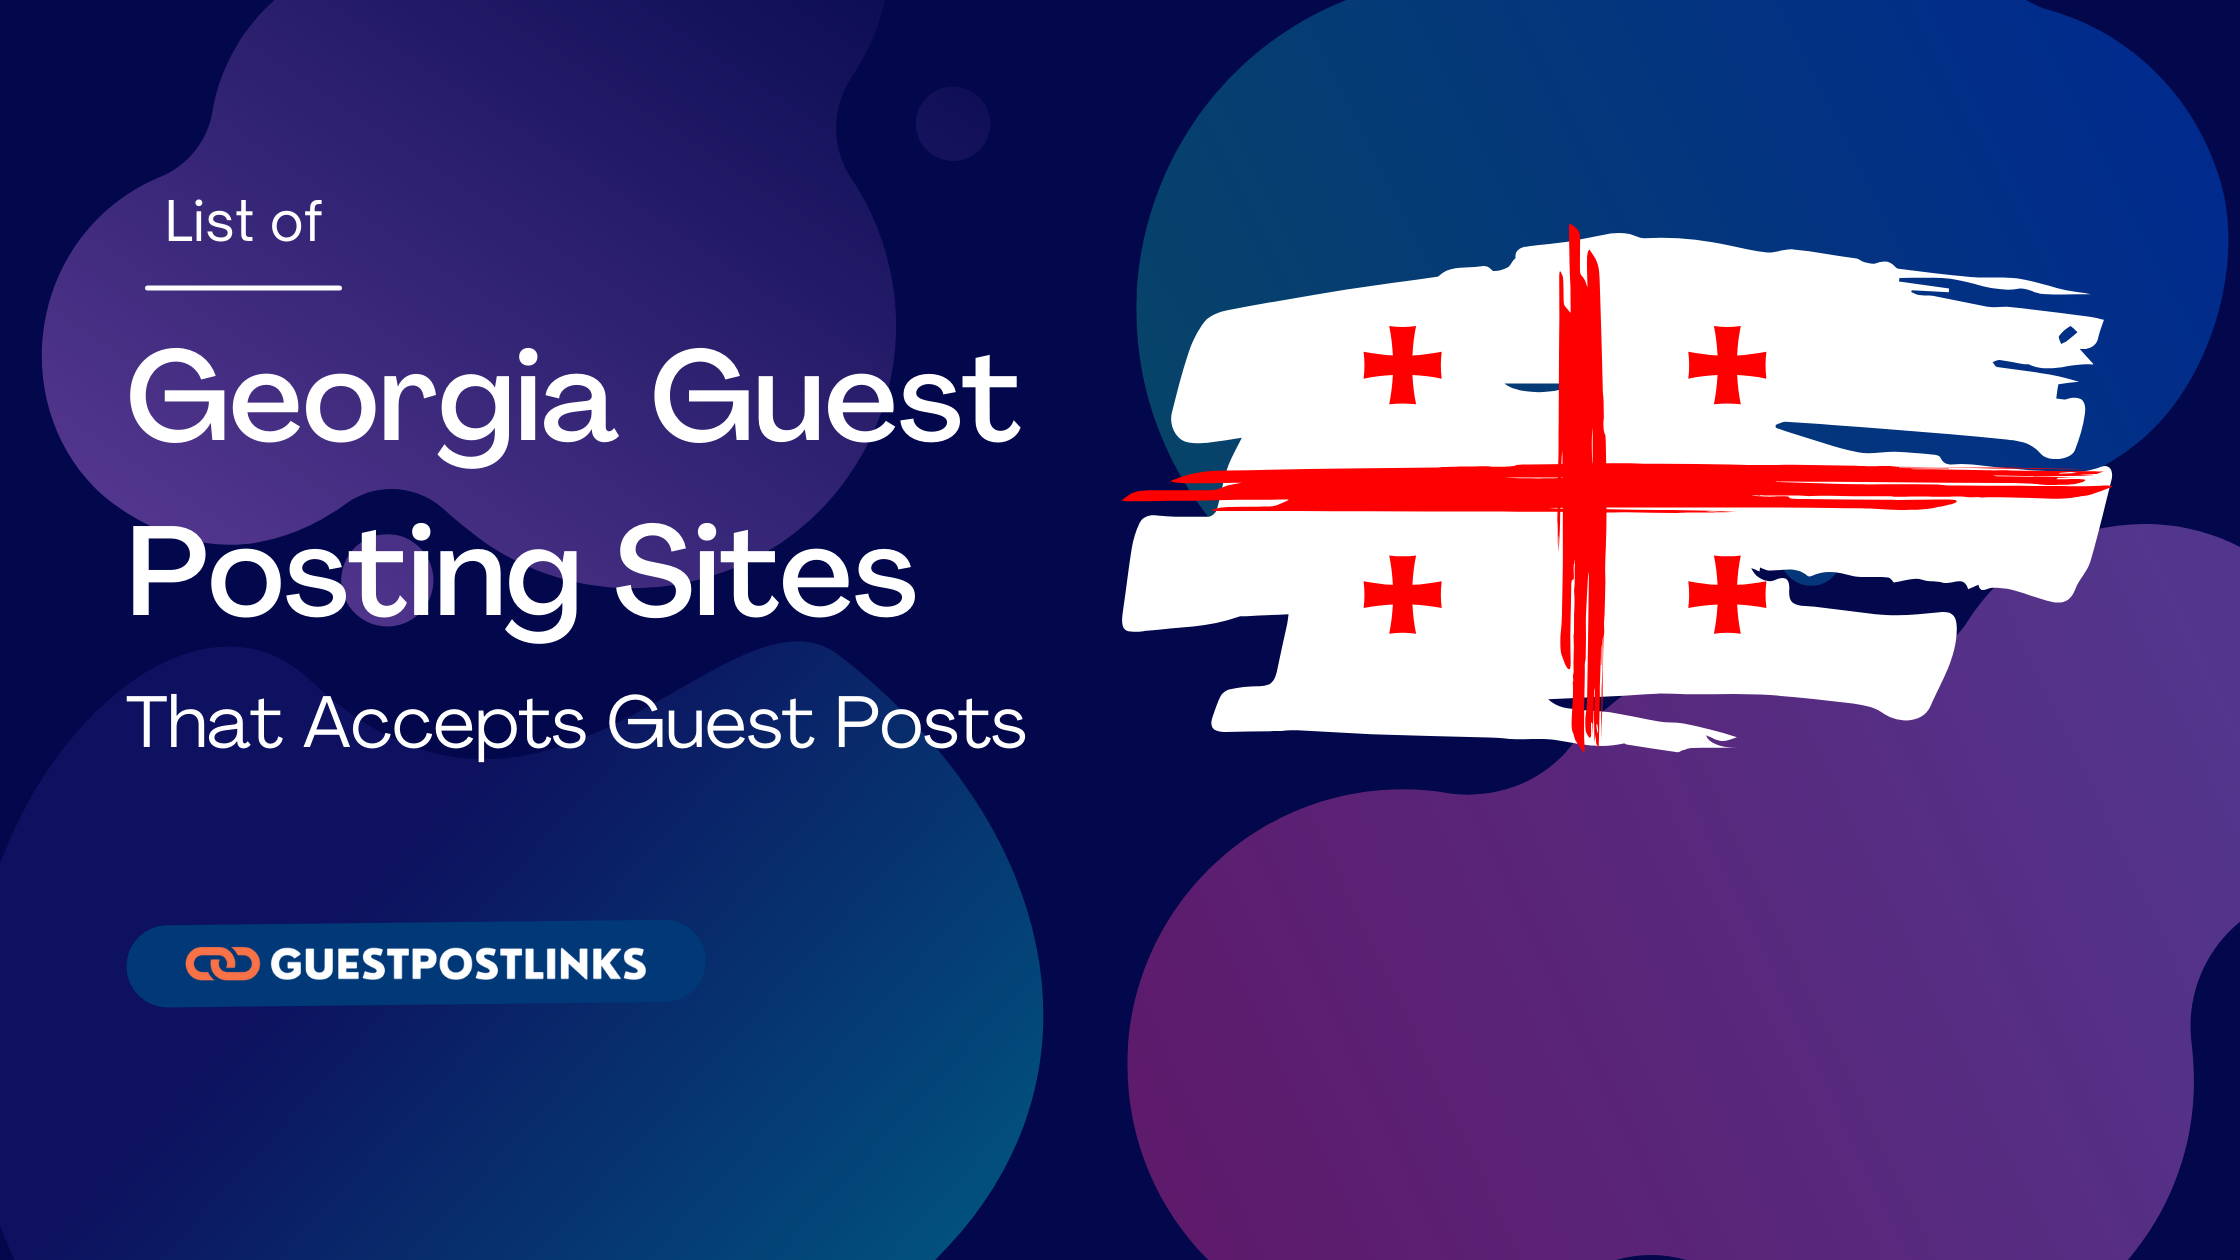 Georgian Guest Posting Sites List